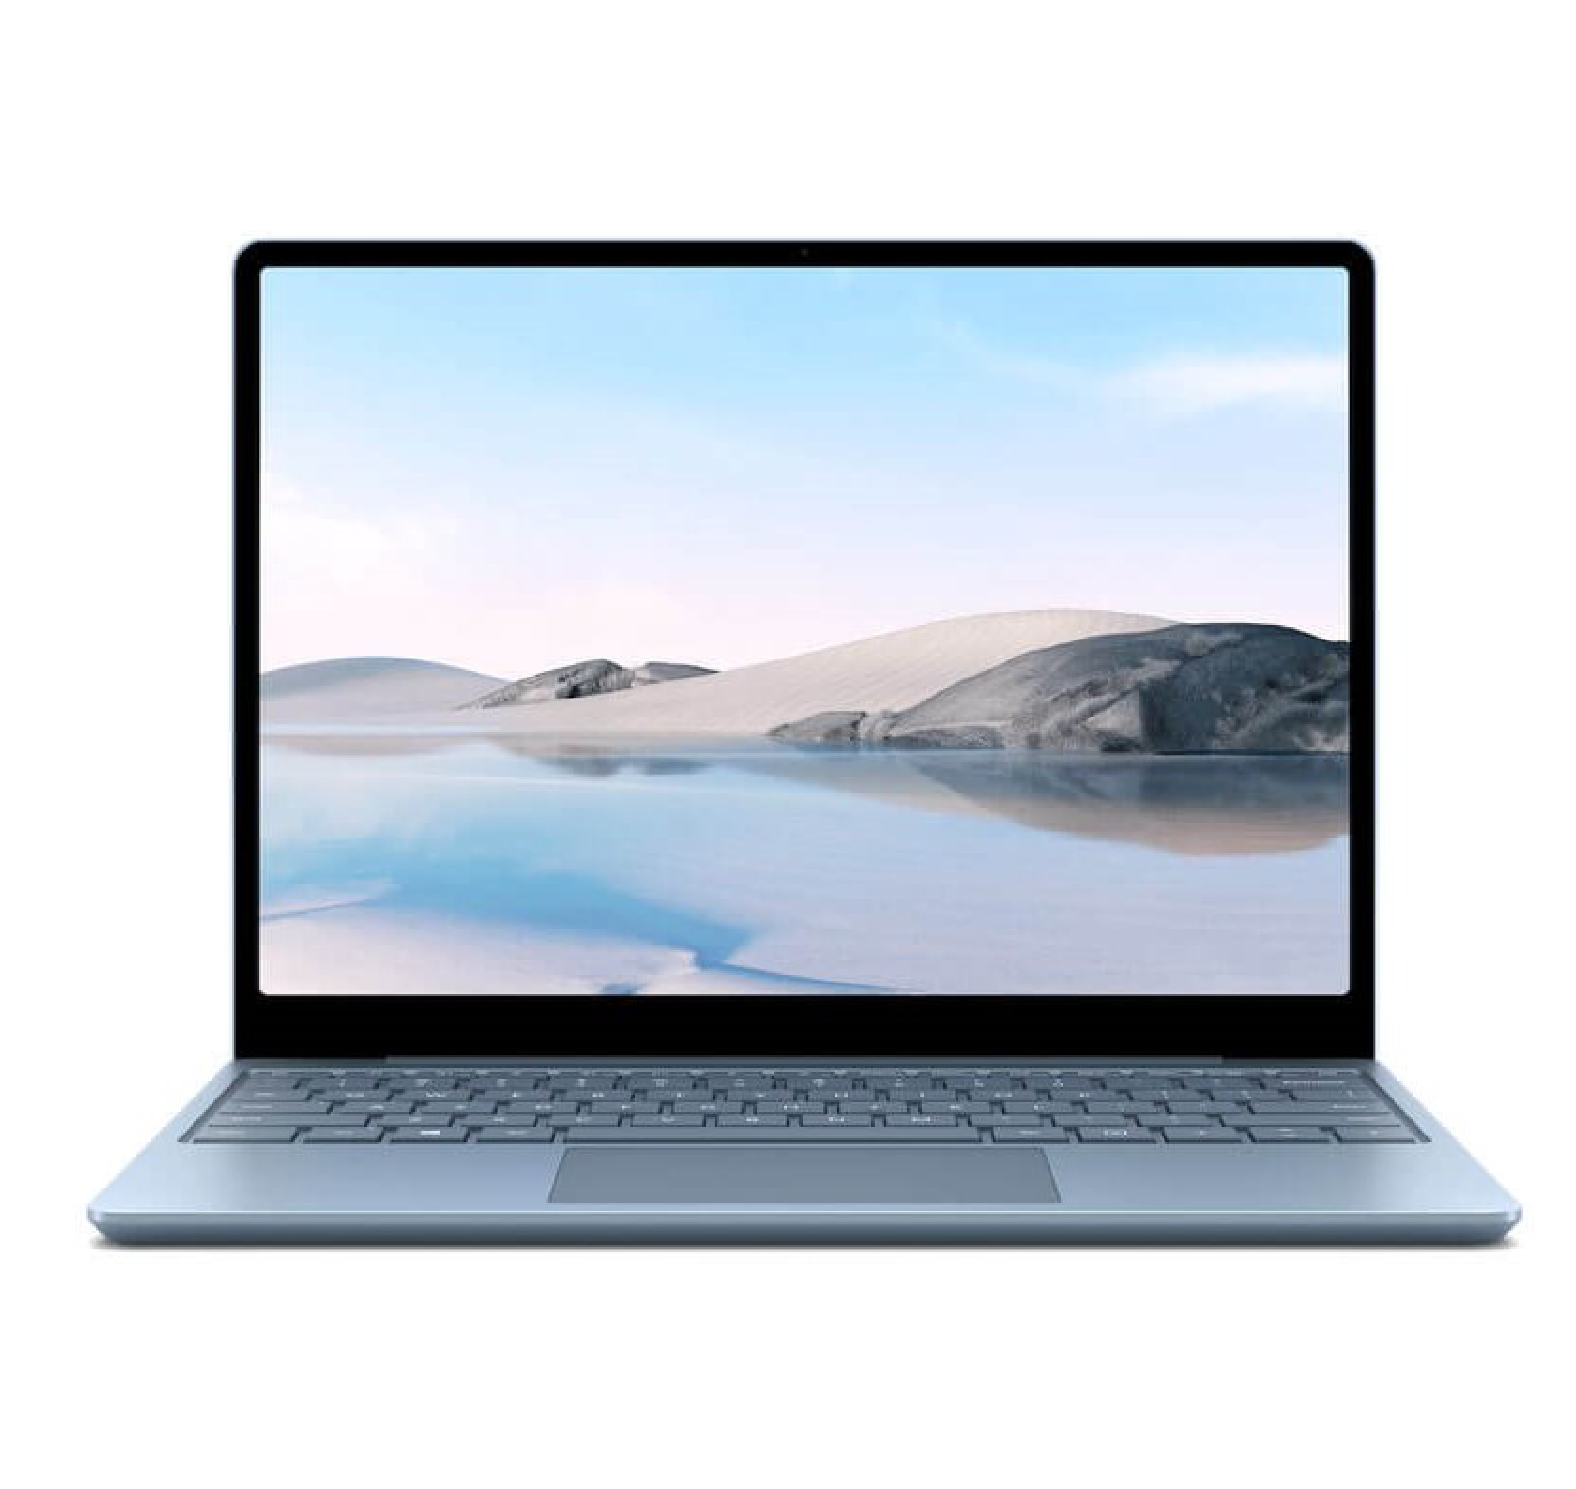 لپ تاپ مایکروسافت  Microsoft Surface Go : Core i5-1035G1 / 8GB RAM / 128GB SSD / Intel / Win10 pro thumb 757